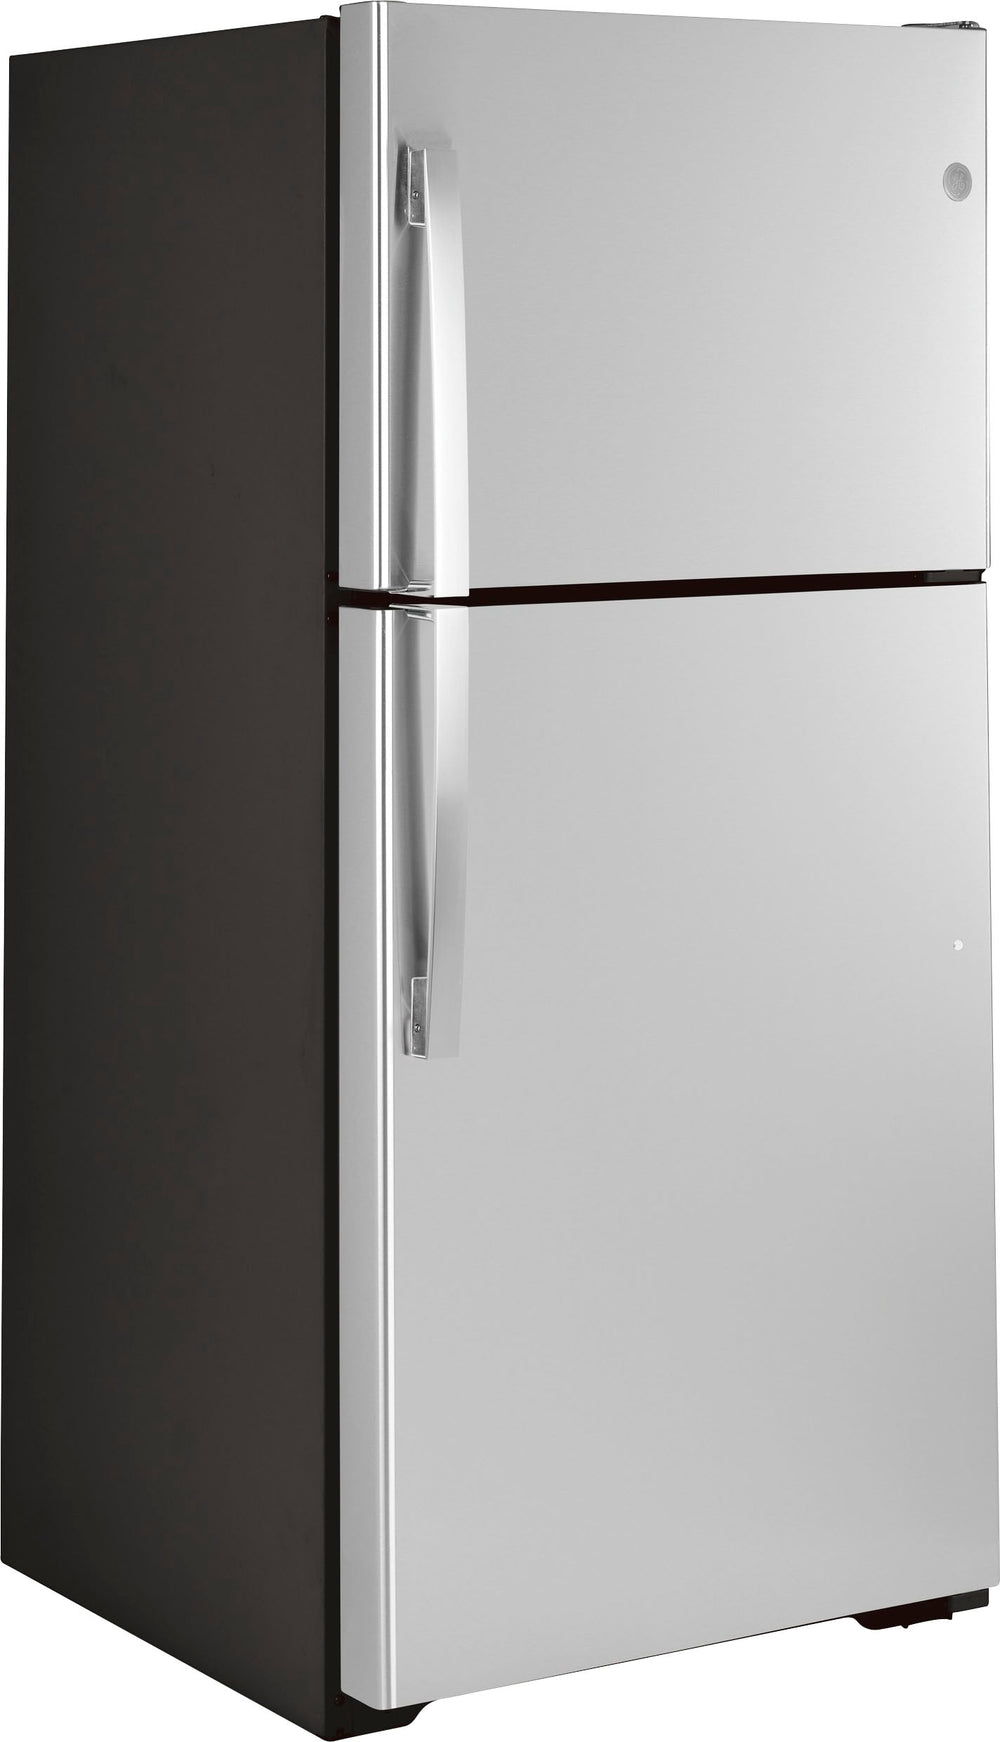 GE - 21.9 Cu. Ft. Garage-Ready Top-Freezer Refrigerator - Stainless steel_1